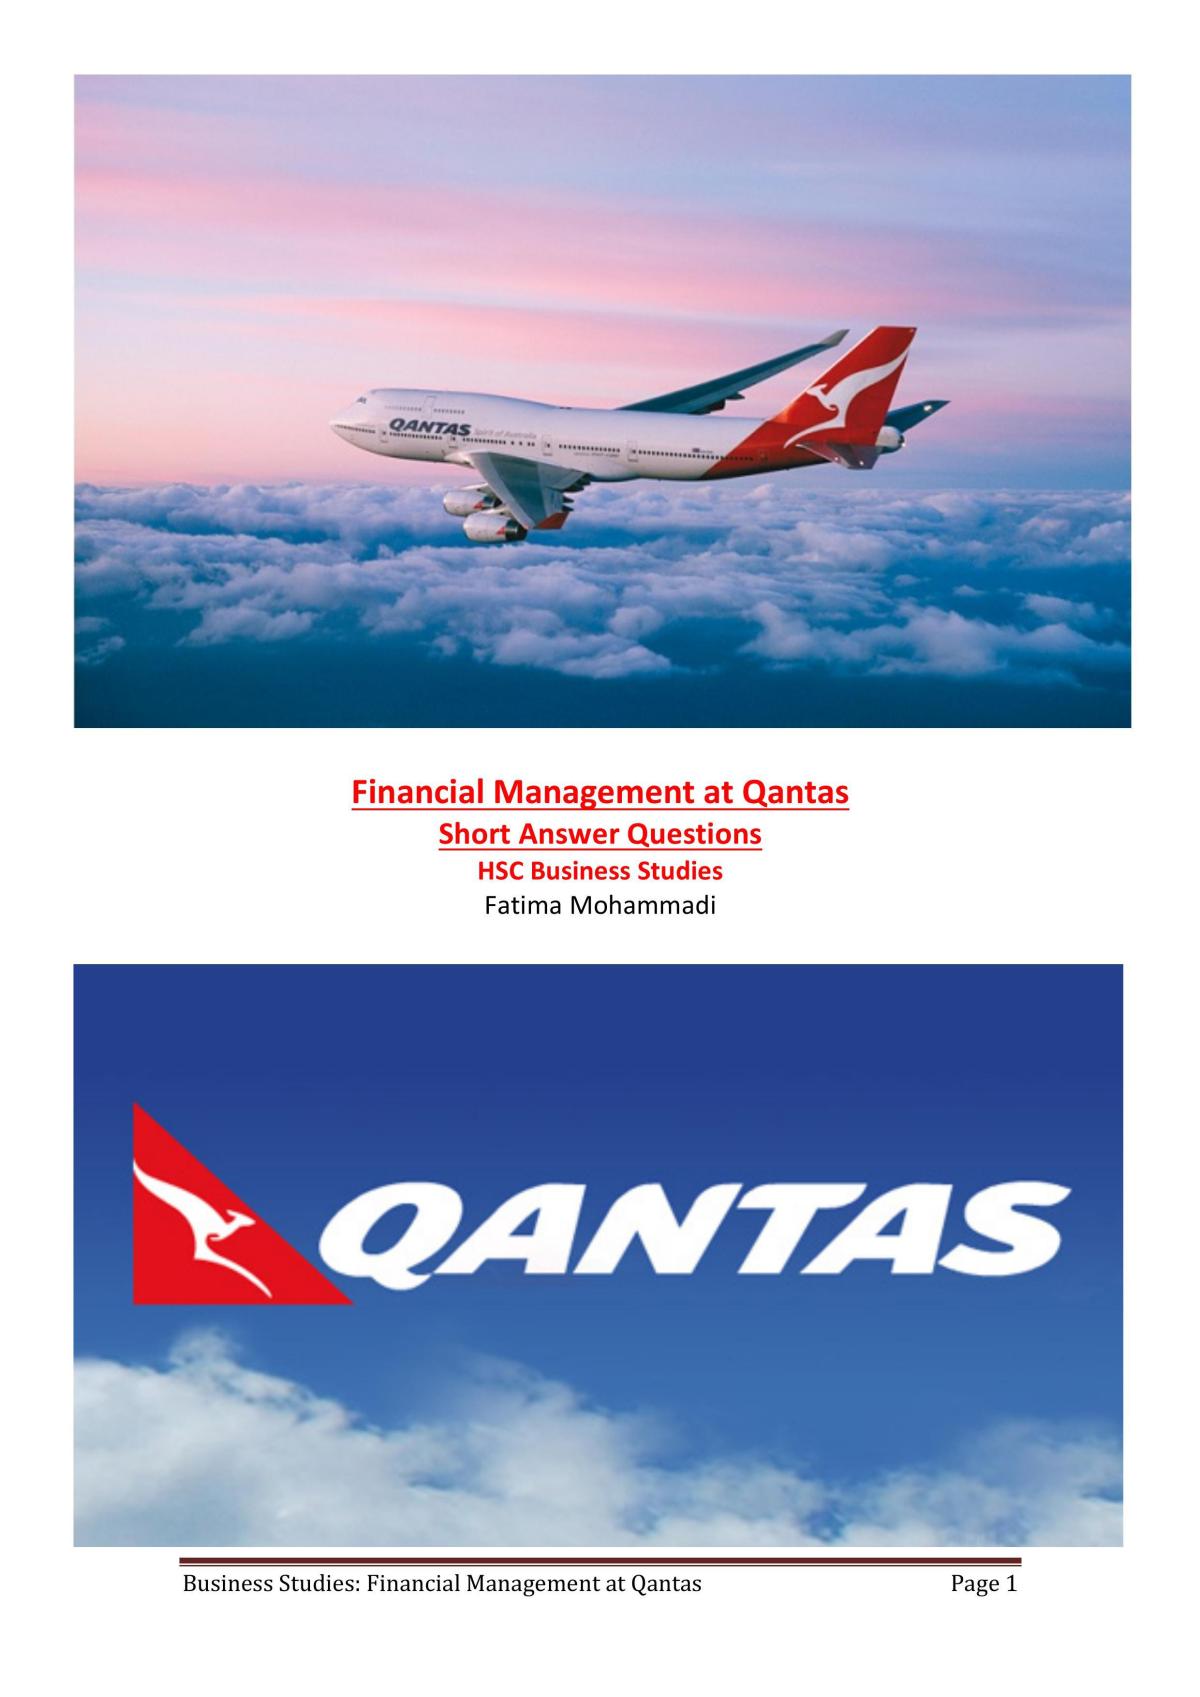 qantas case study business studies finance